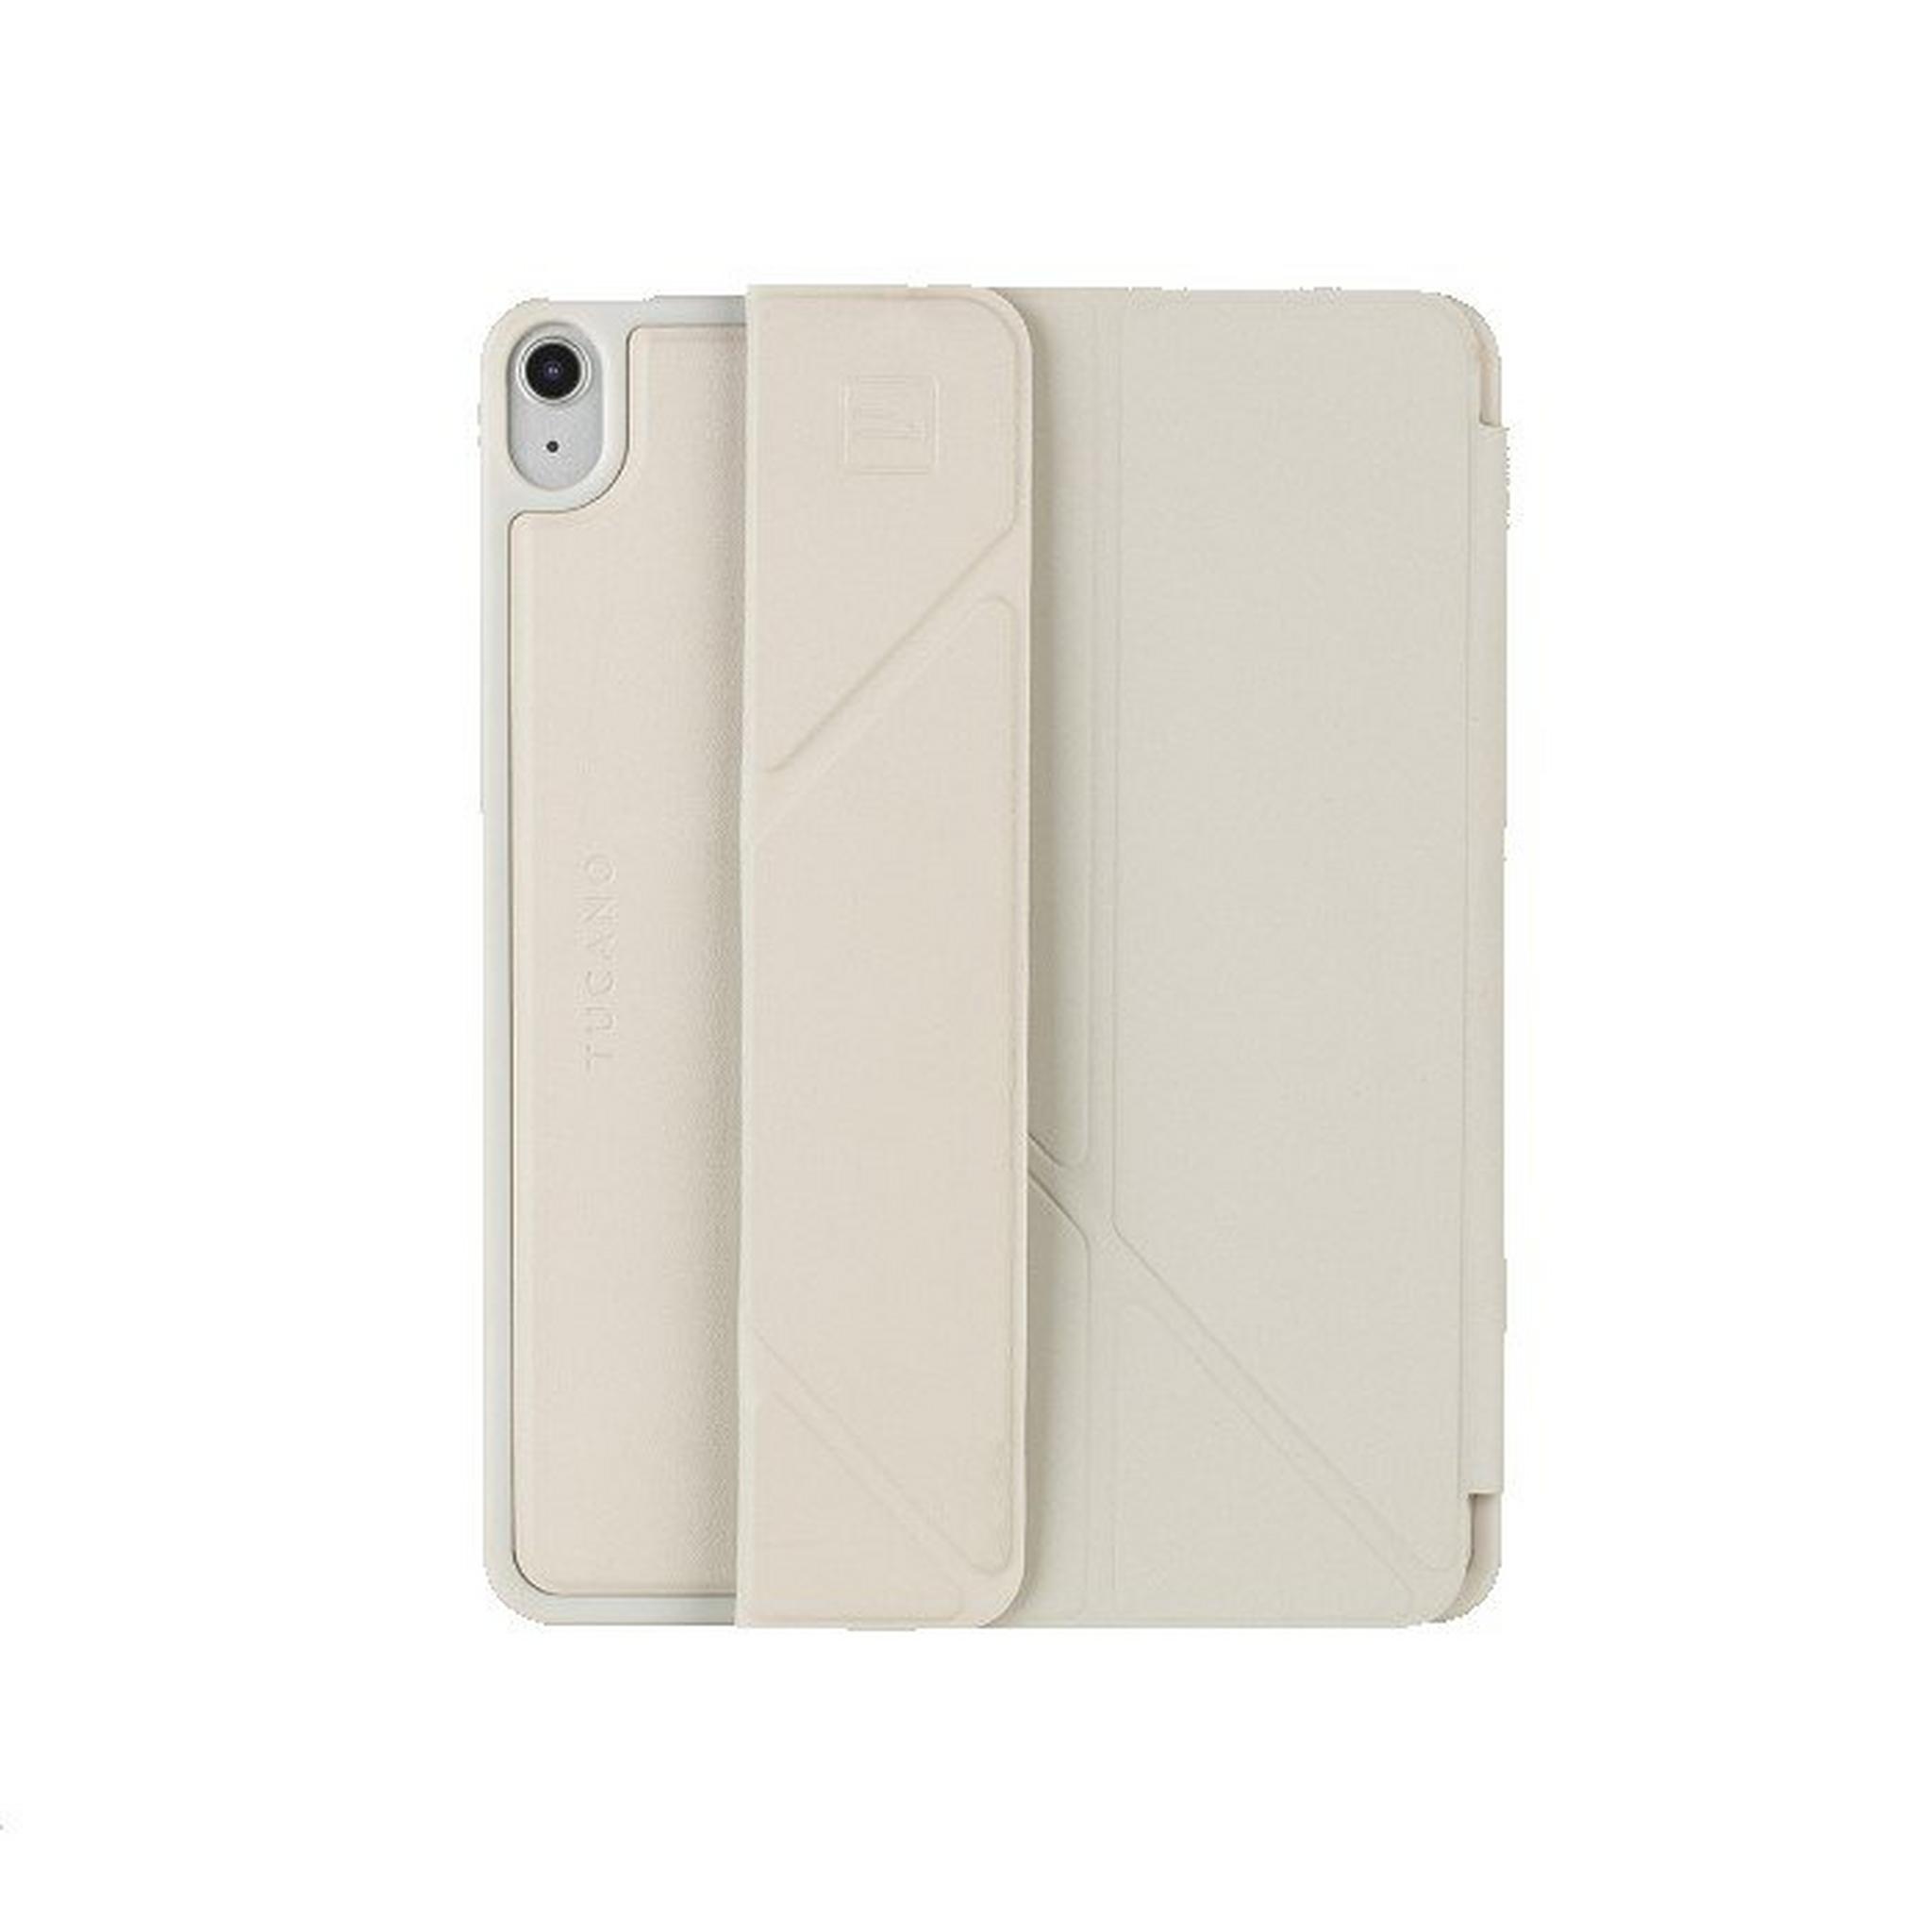 Tucano Bamboo Folio Case for iPad 10th gen 10,9-inch, IPD1022BA-I – White